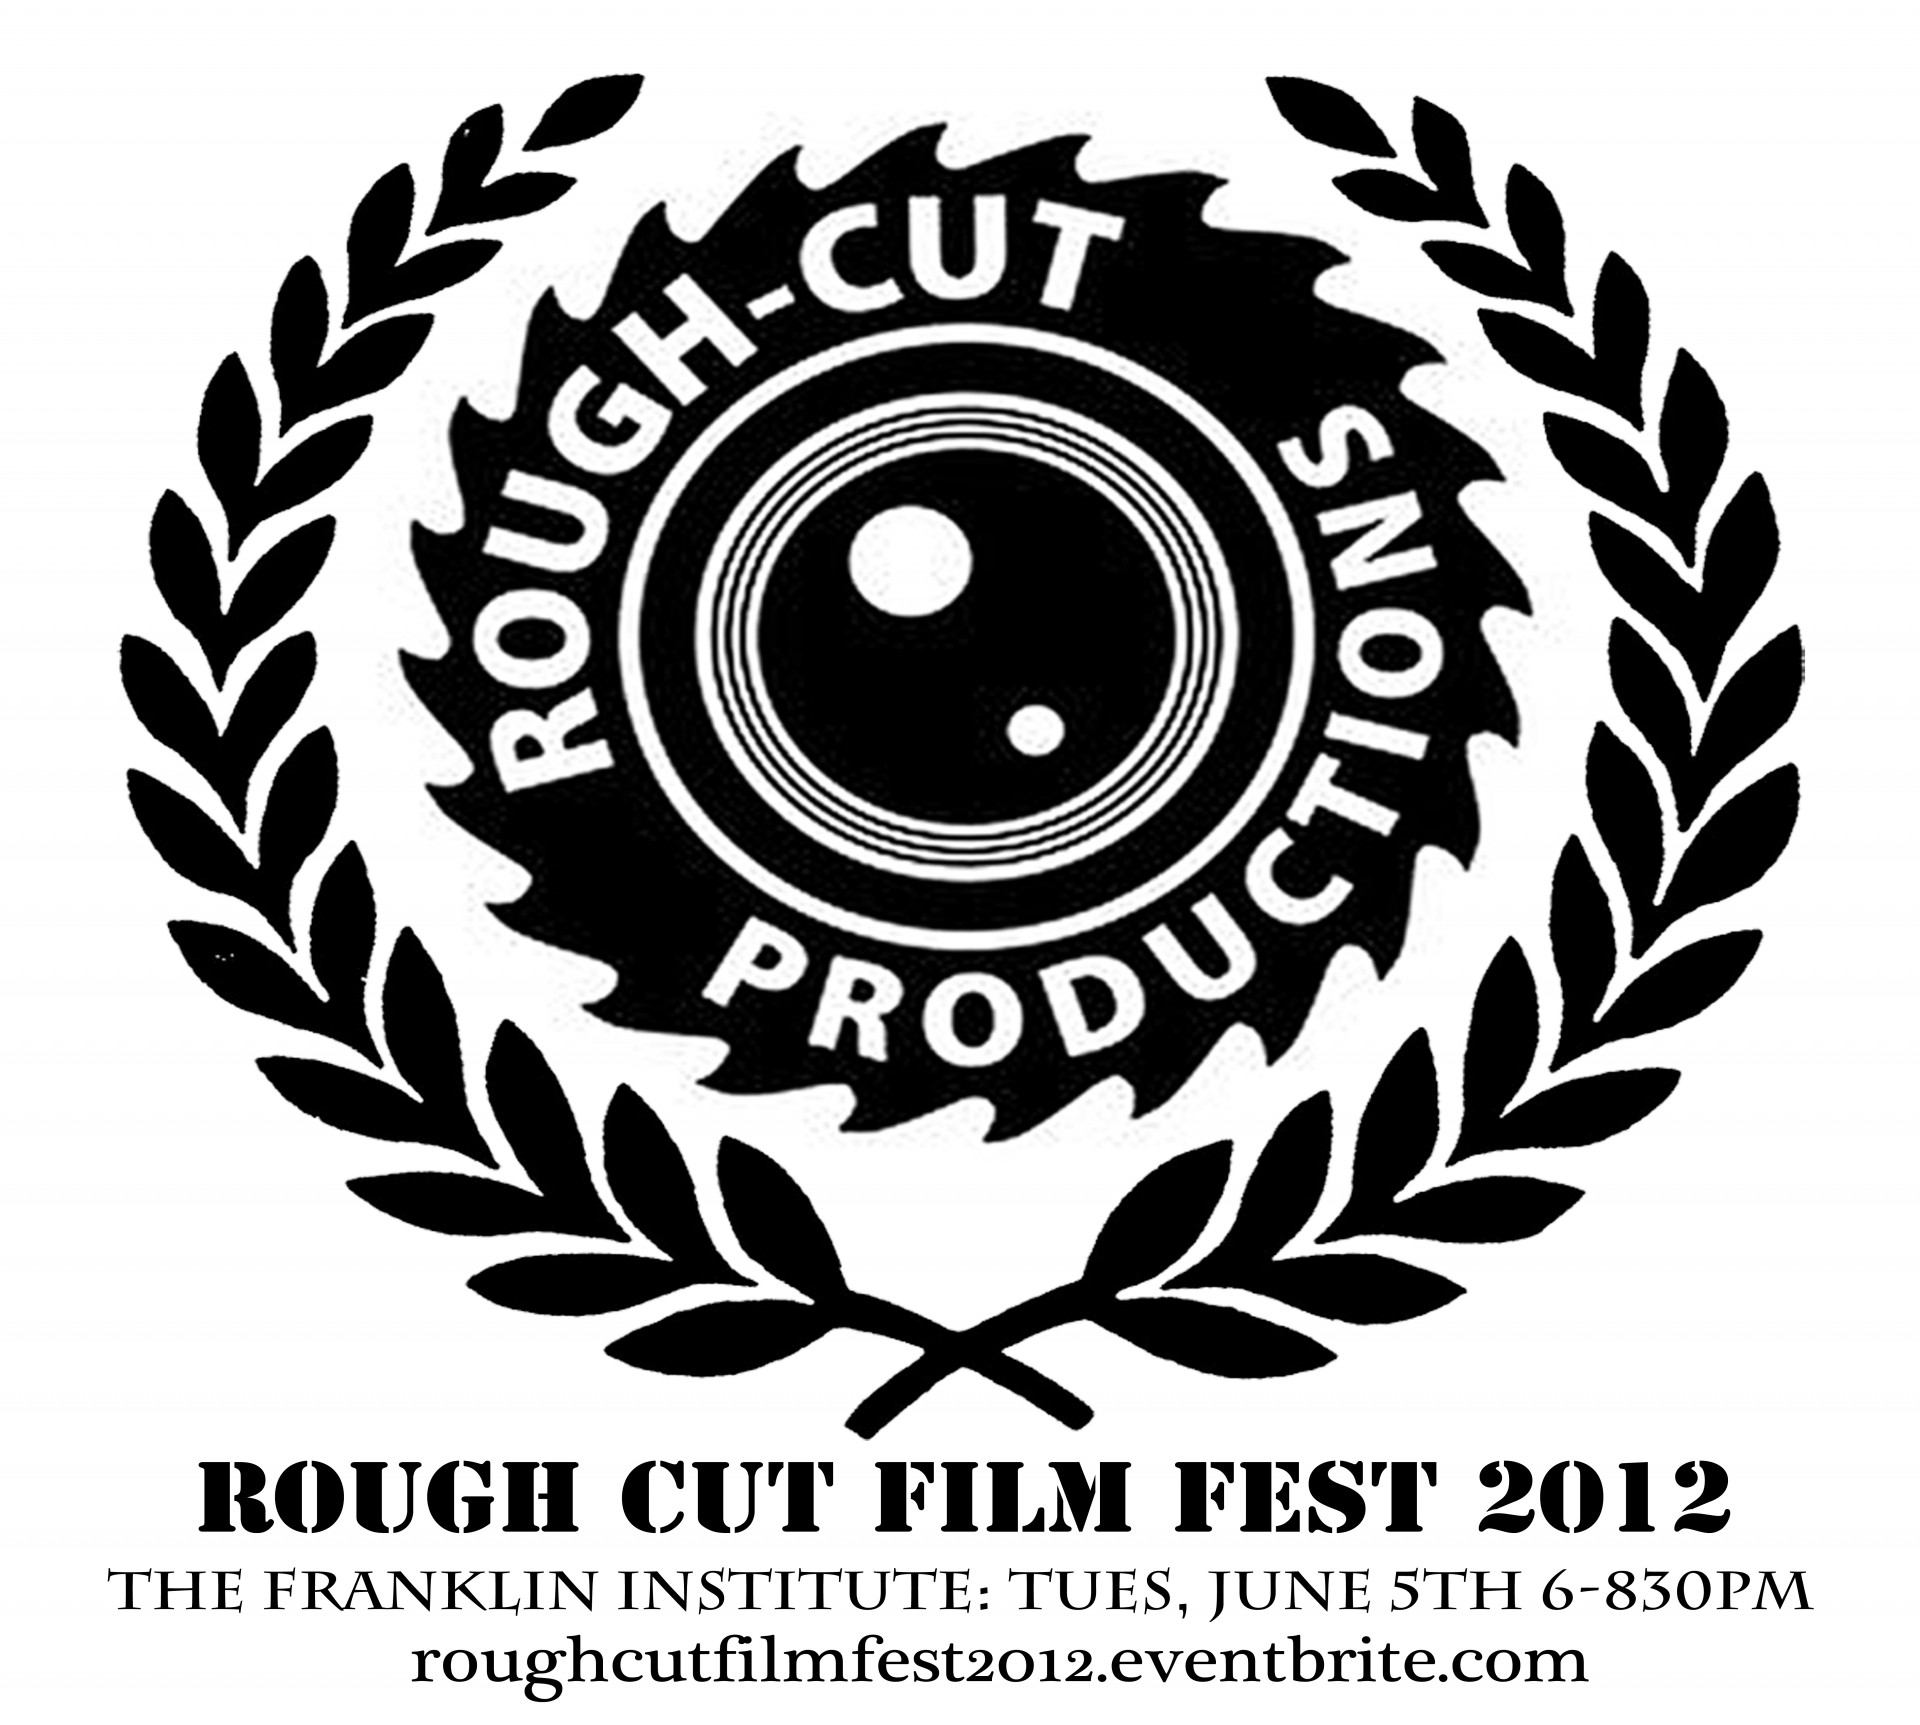 RCutFilmFest2012